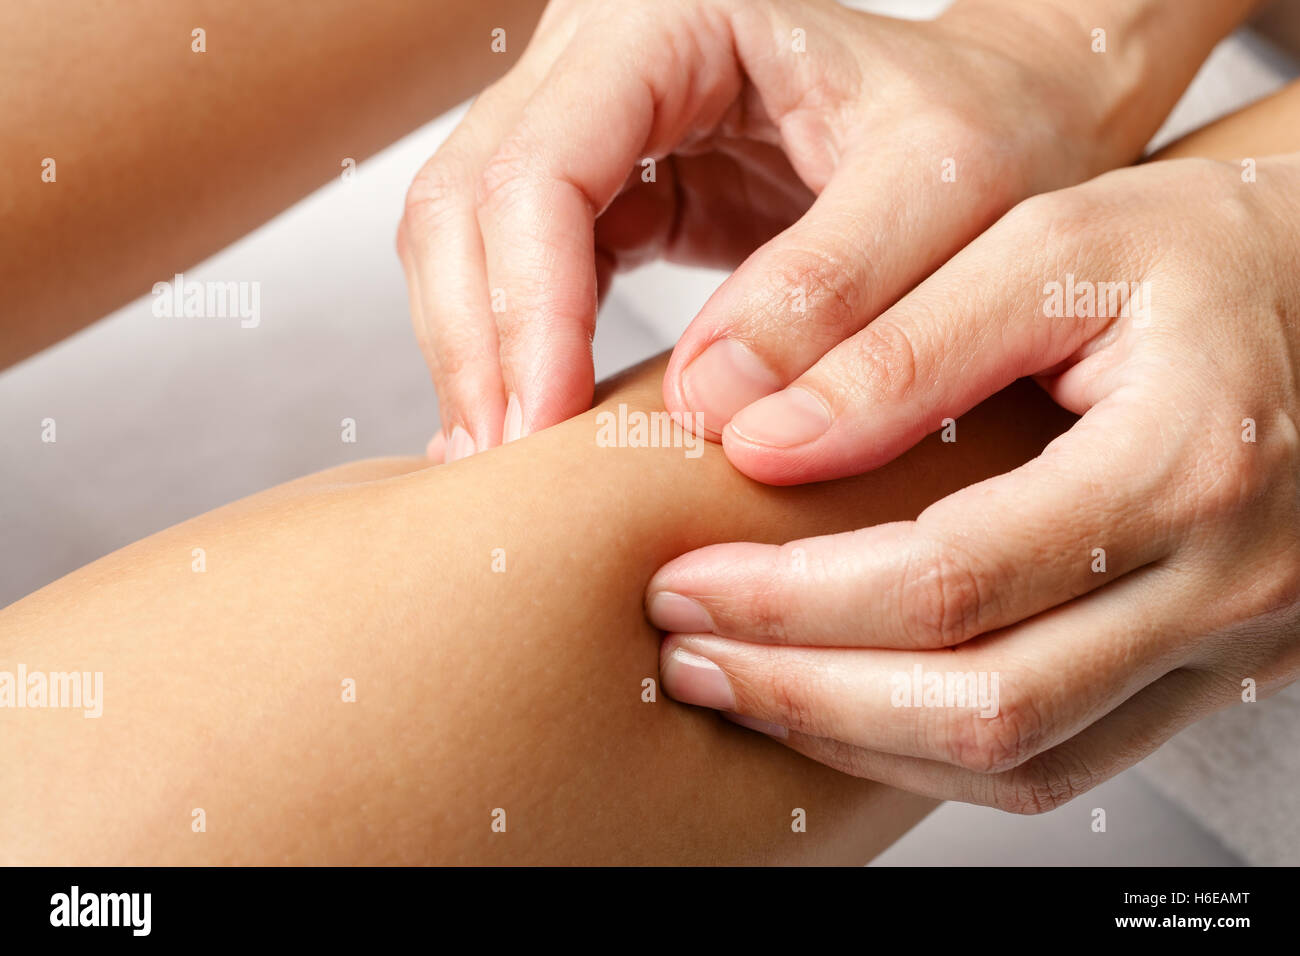 Macro close up of hands doing rehabilitation massage on female calf muscle. Stock Photo